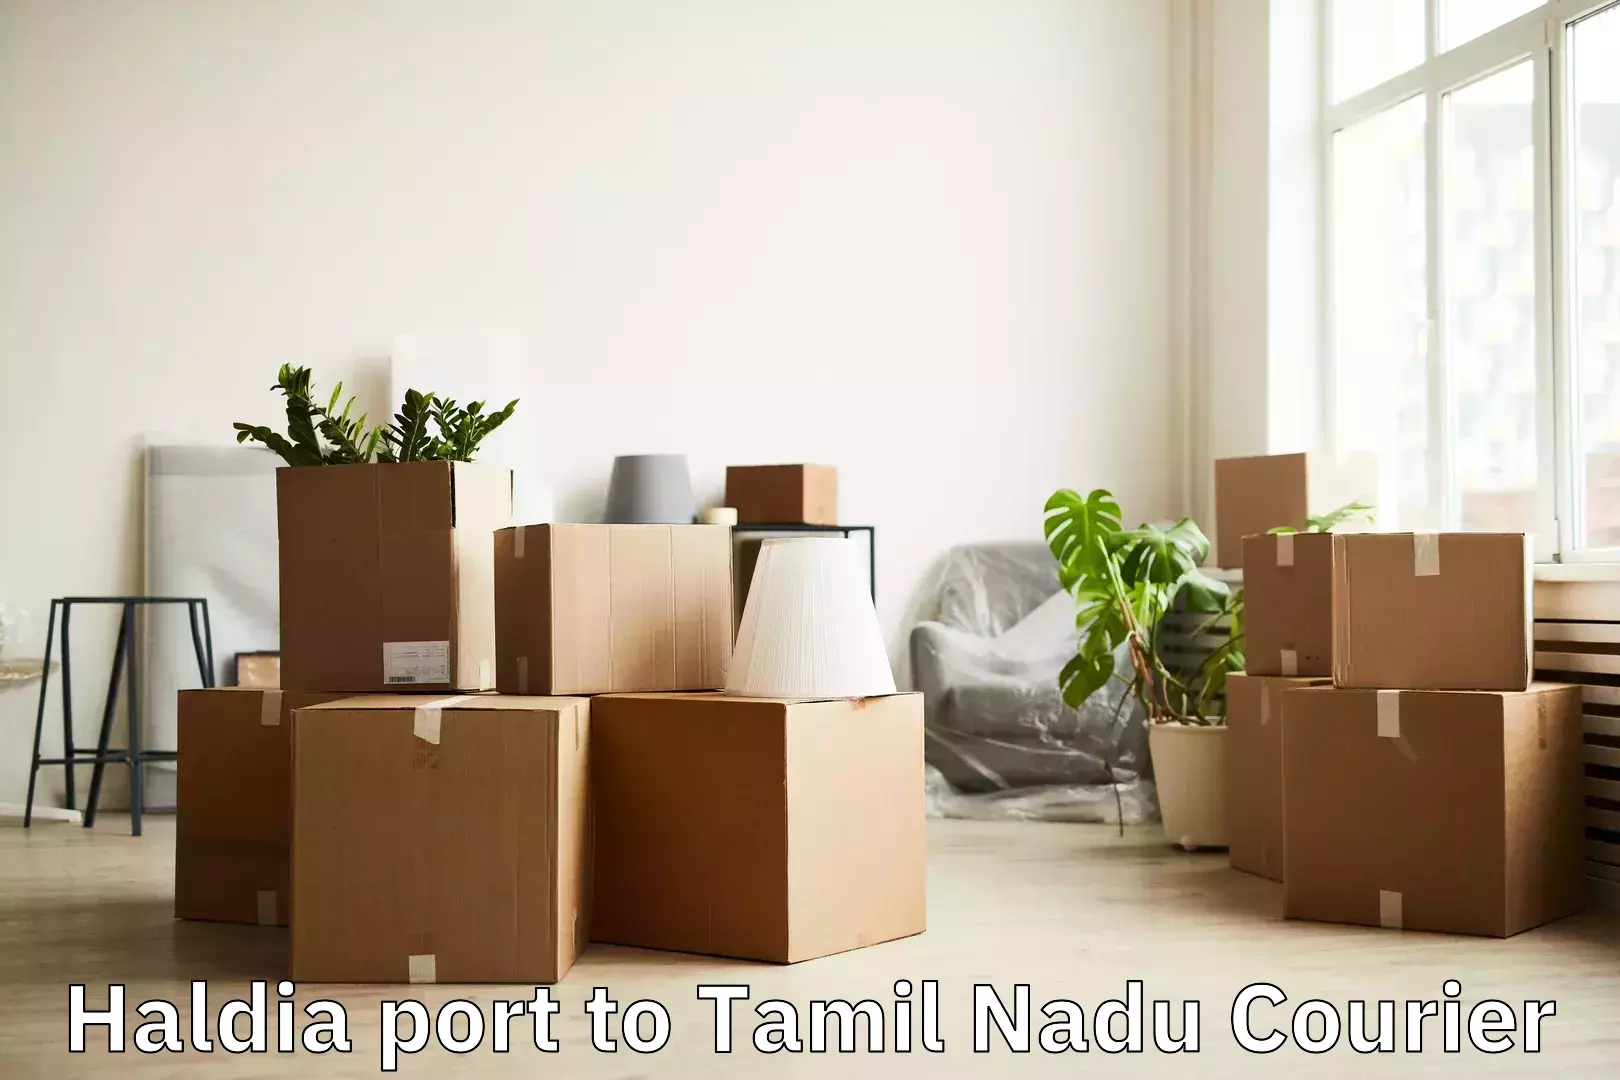 Online luggage shipping booking Haldia port to Chennai